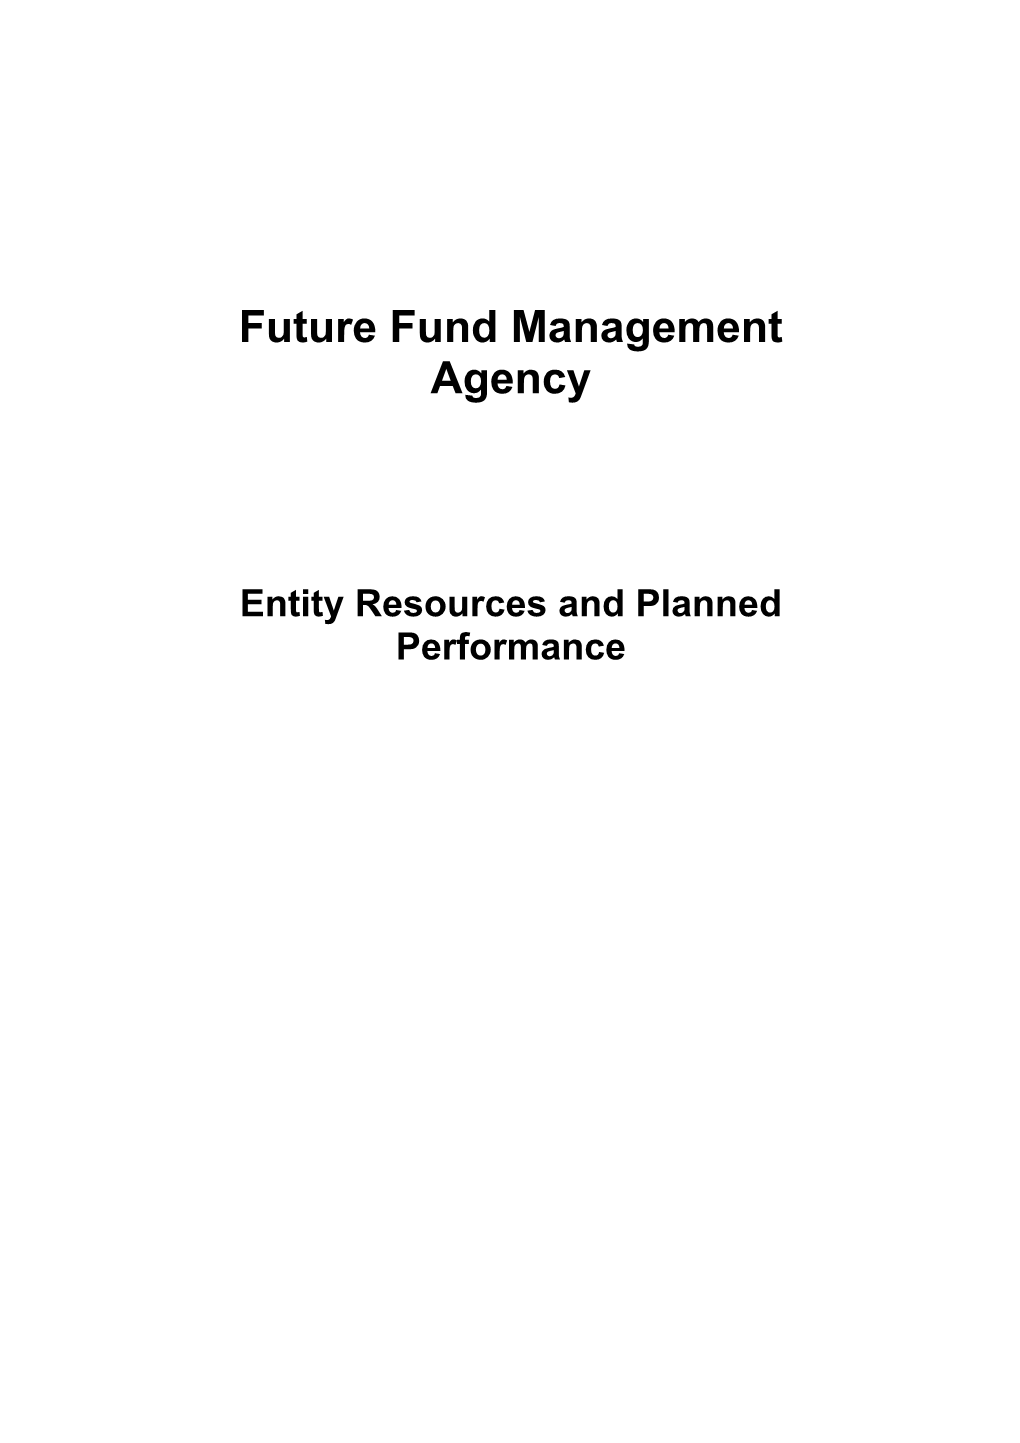 Future Fund Management Agency